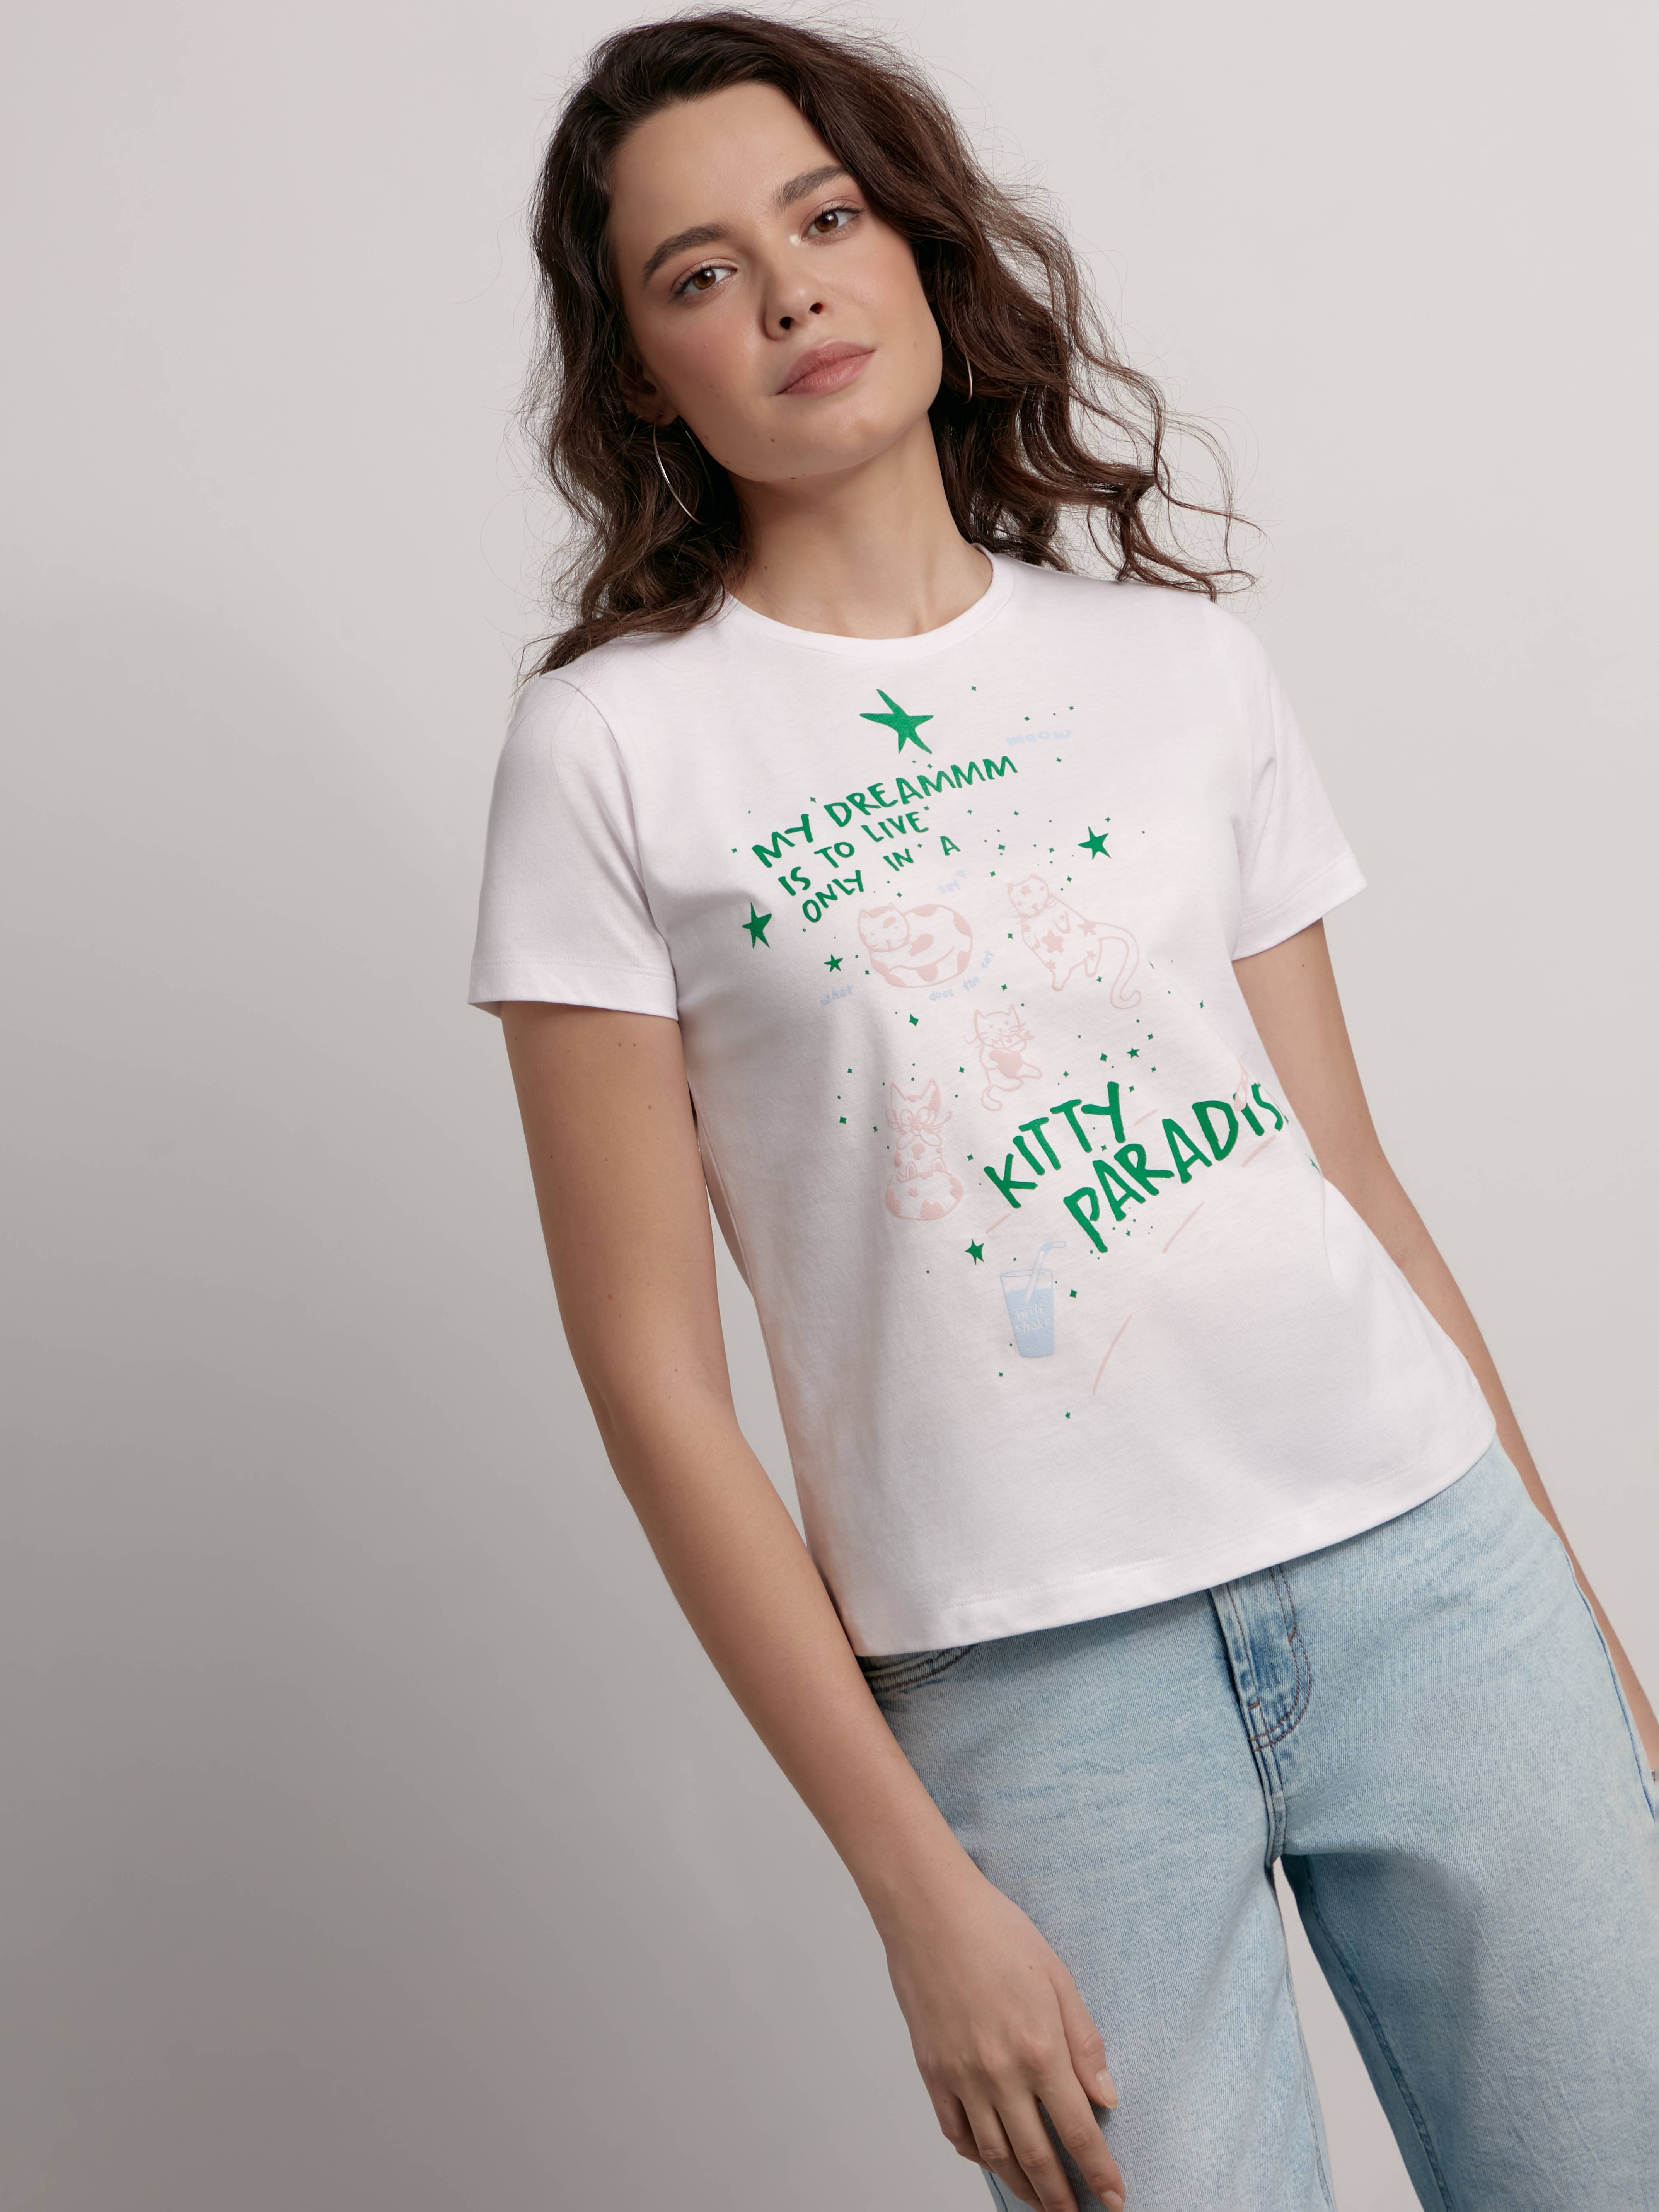 Базовая футболка из хлопка с рисунком «Kitty paradise» LD 2139 Conte ⭐️, цвет white, размер 170-100/xl - фото 1